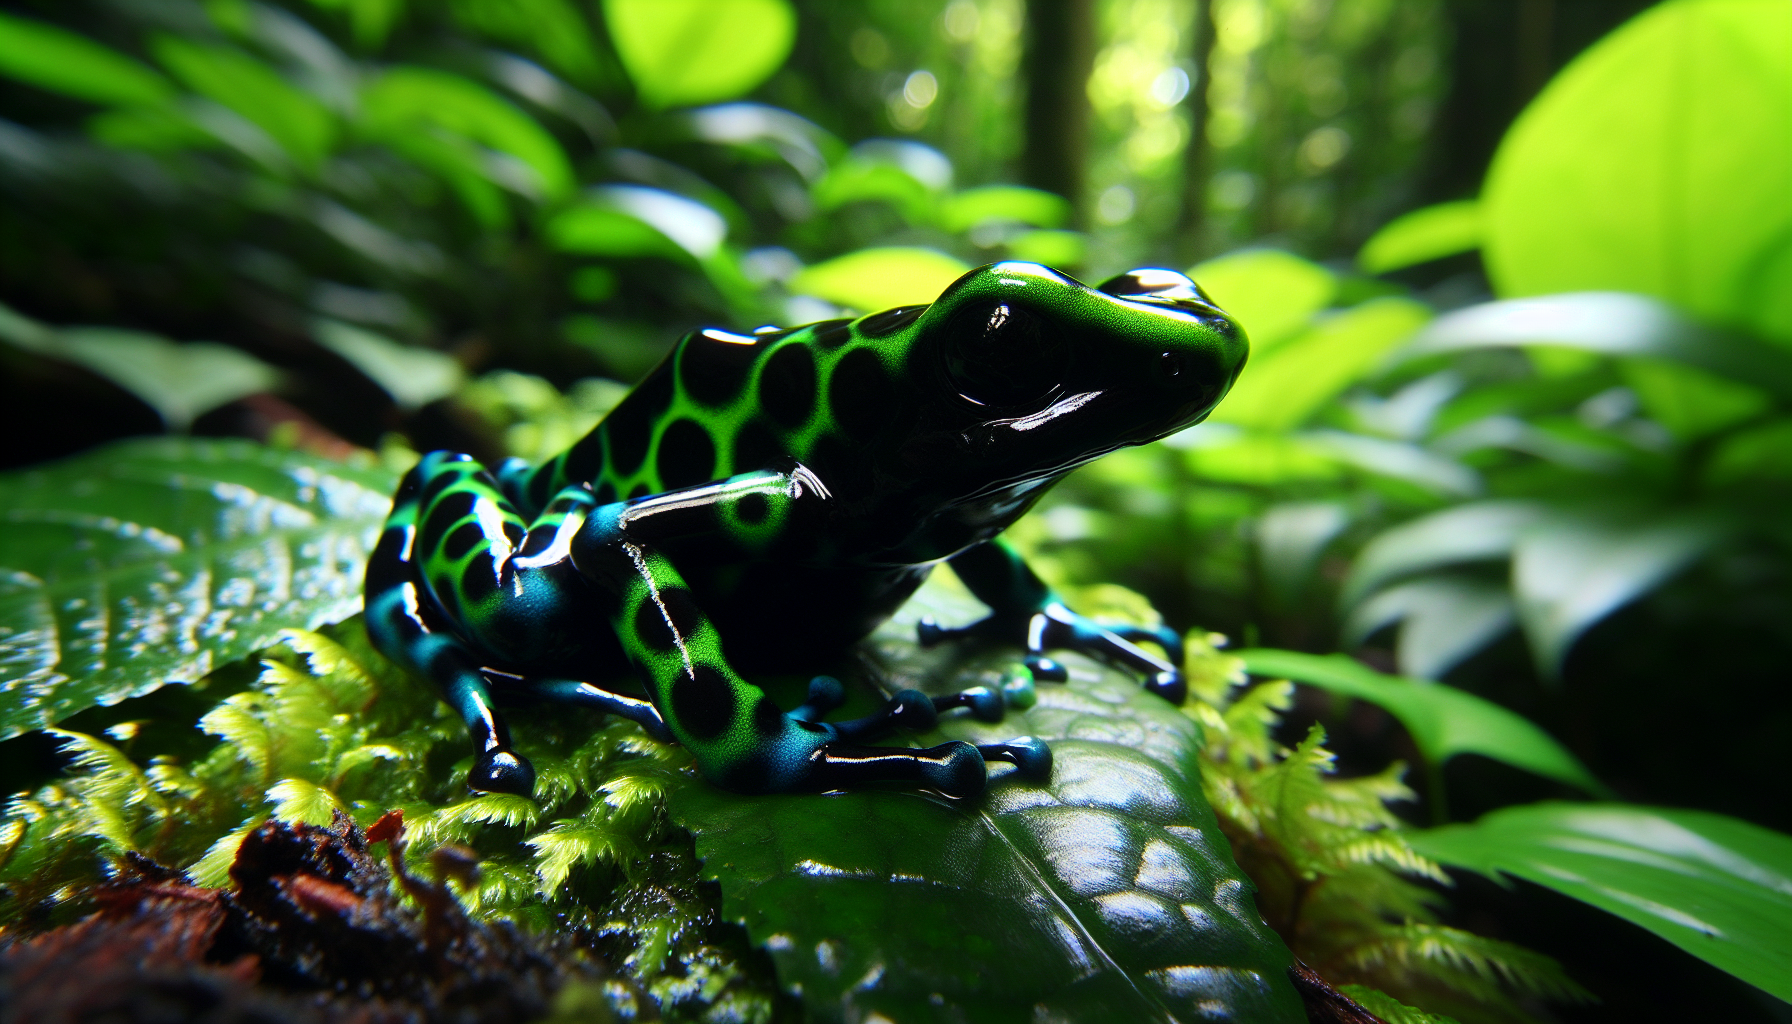 Elusive black poison dart frog camouflaged in foliage